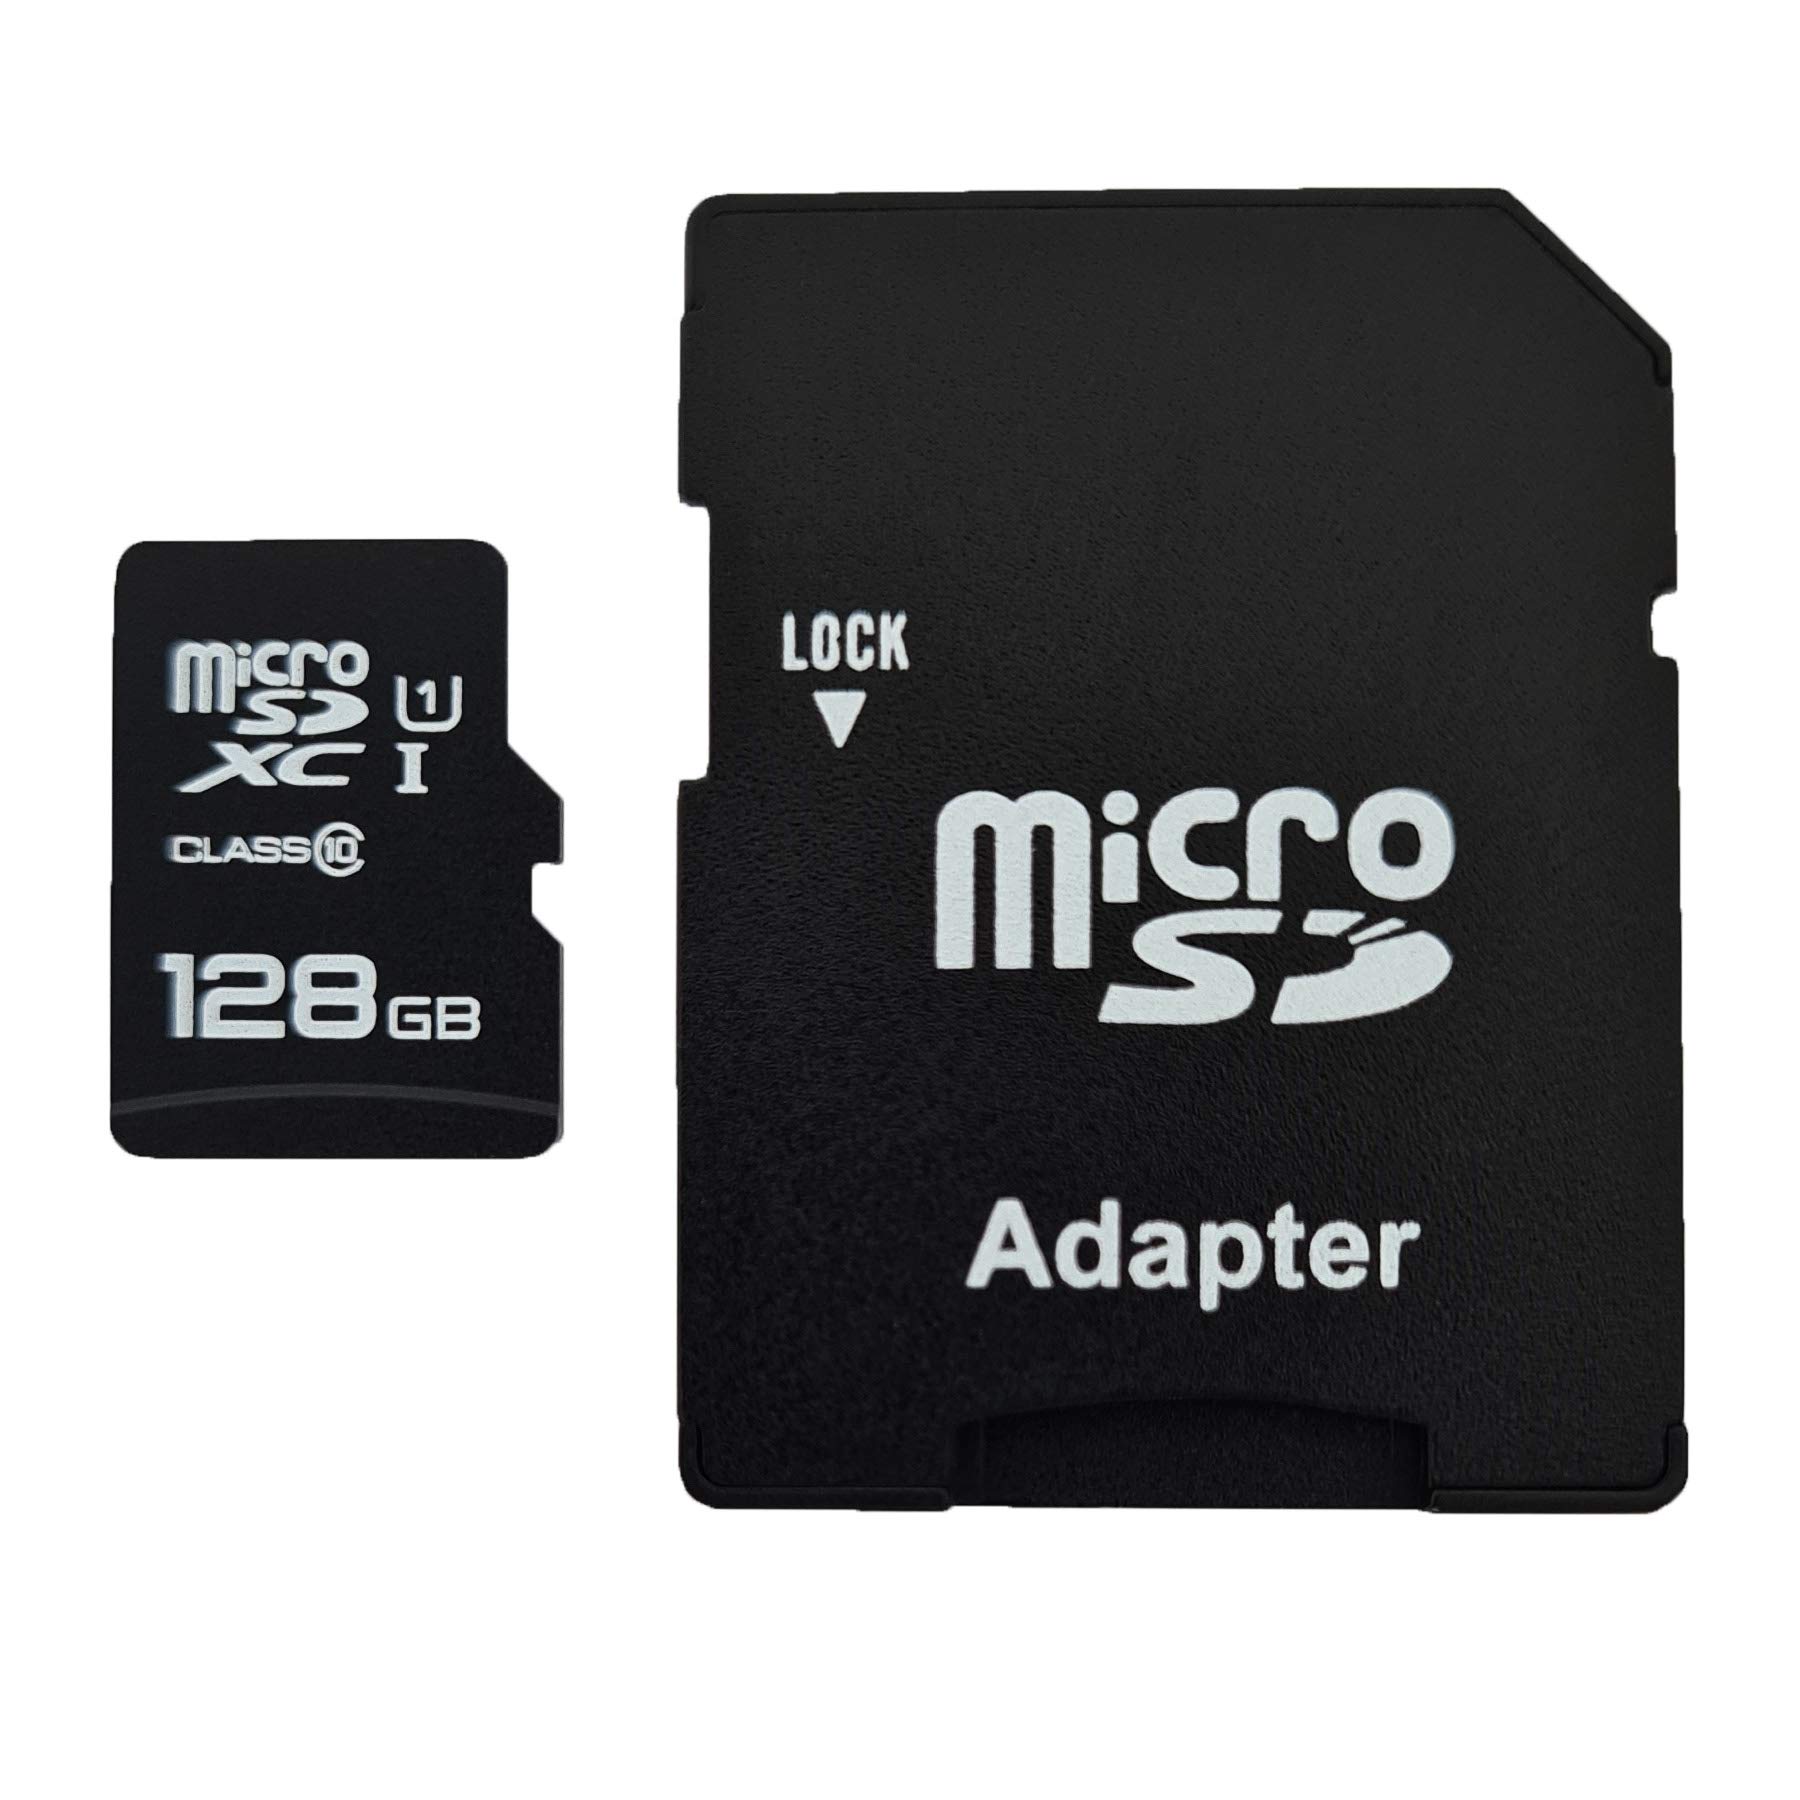 dekoelektropunktde 128GB MicroSDXC Speicherkarte mit Adapter Class 10 kompatibel für Olympus Tough TG-620 TG-830